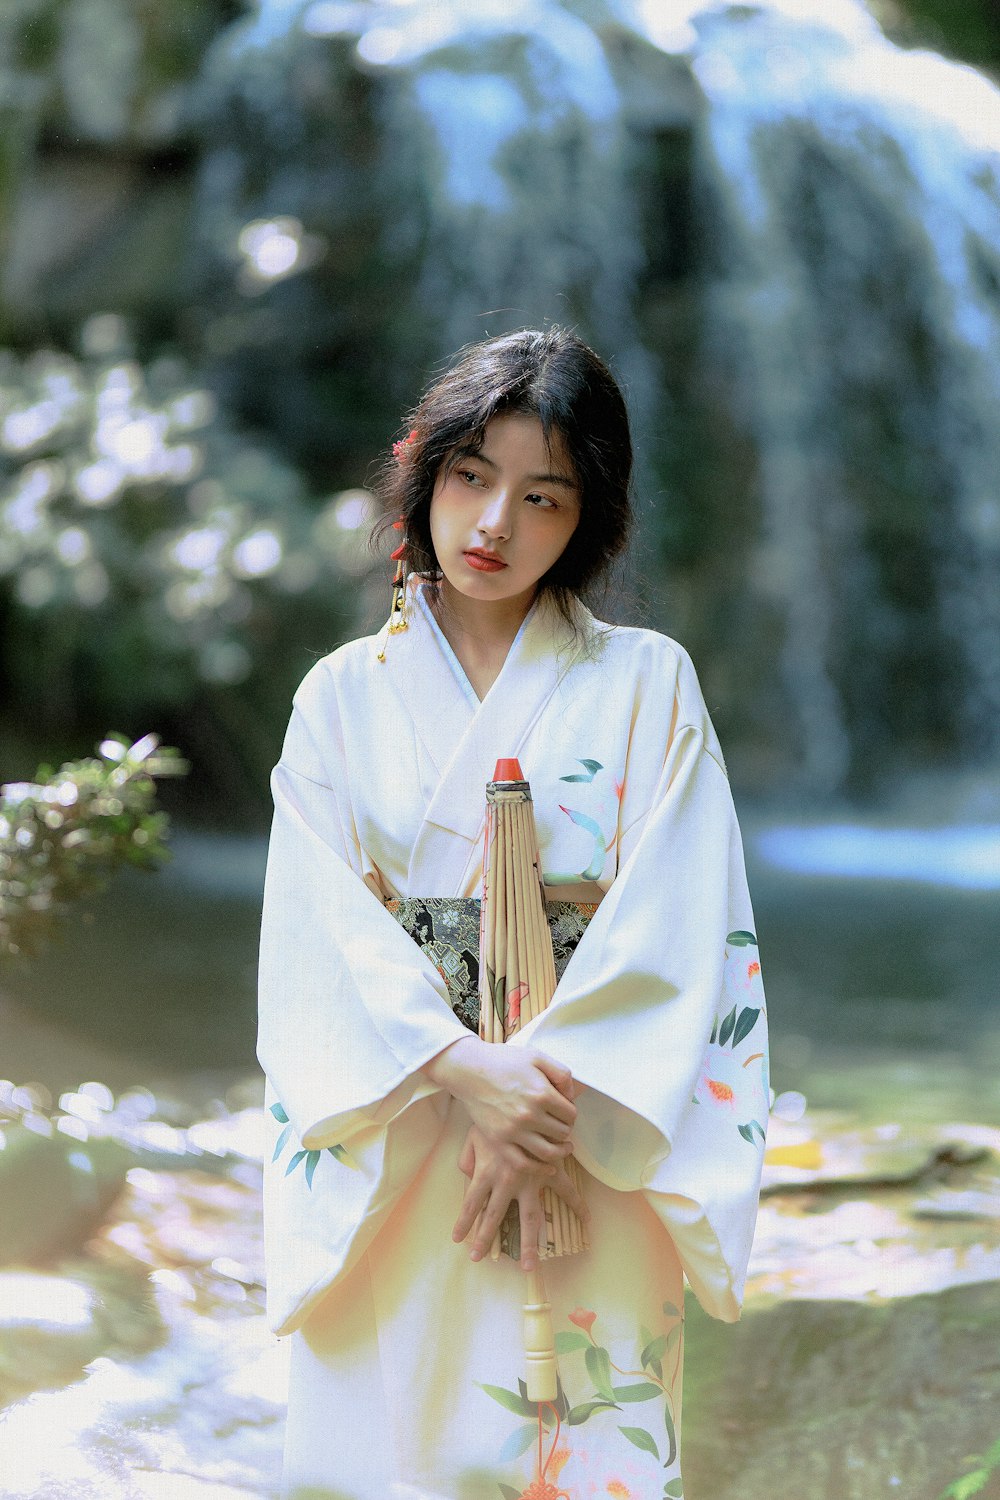 Woman in white kimono standing near white flowers during daytime photo –  Free People Image on Unsplash